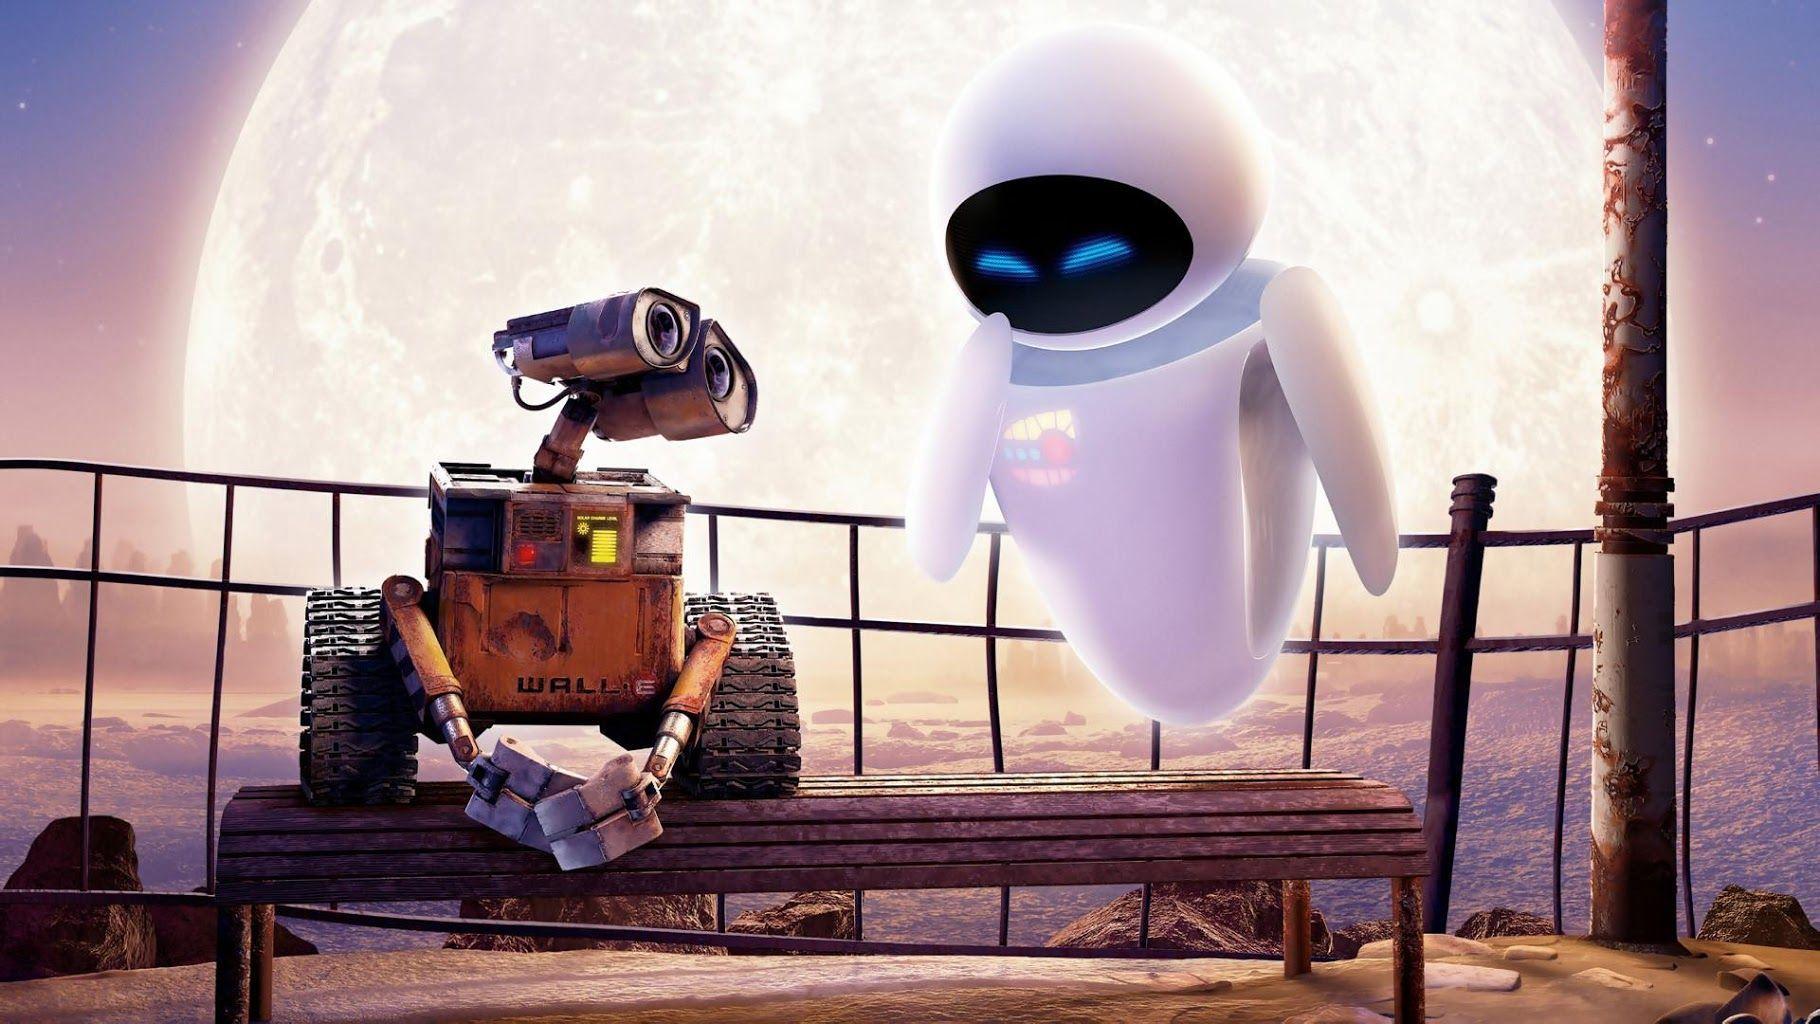 WALL.E Wallpaper Download.E Wallpaper 1.4 (Android) Free